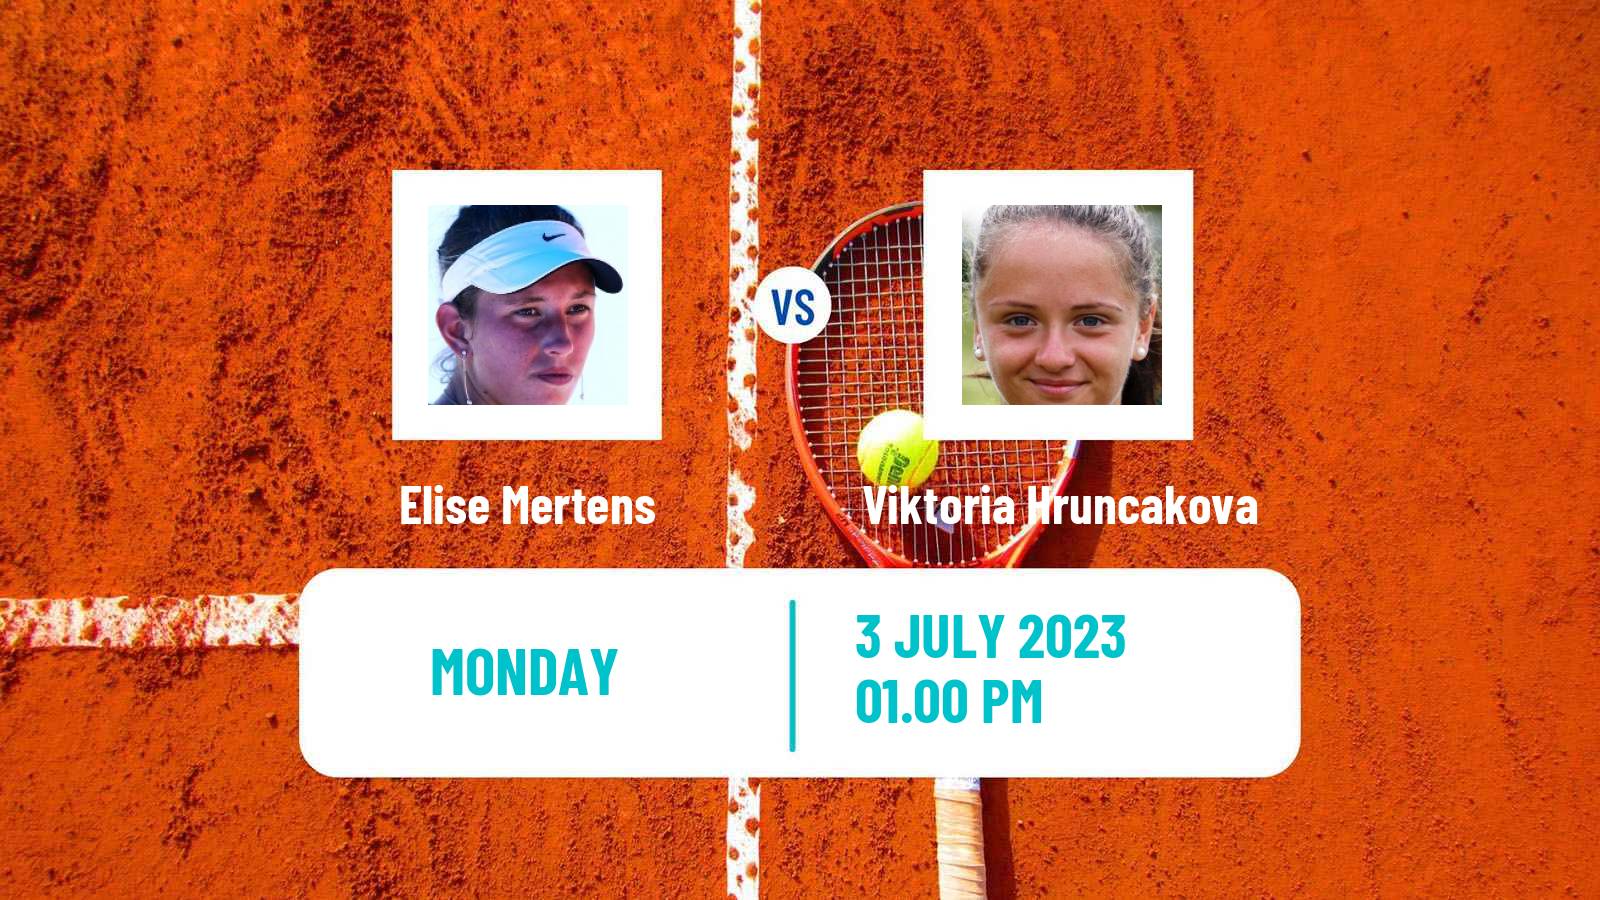 Tennis WTA Wimbledon Elise Mertens - Viktoria Hruncakova